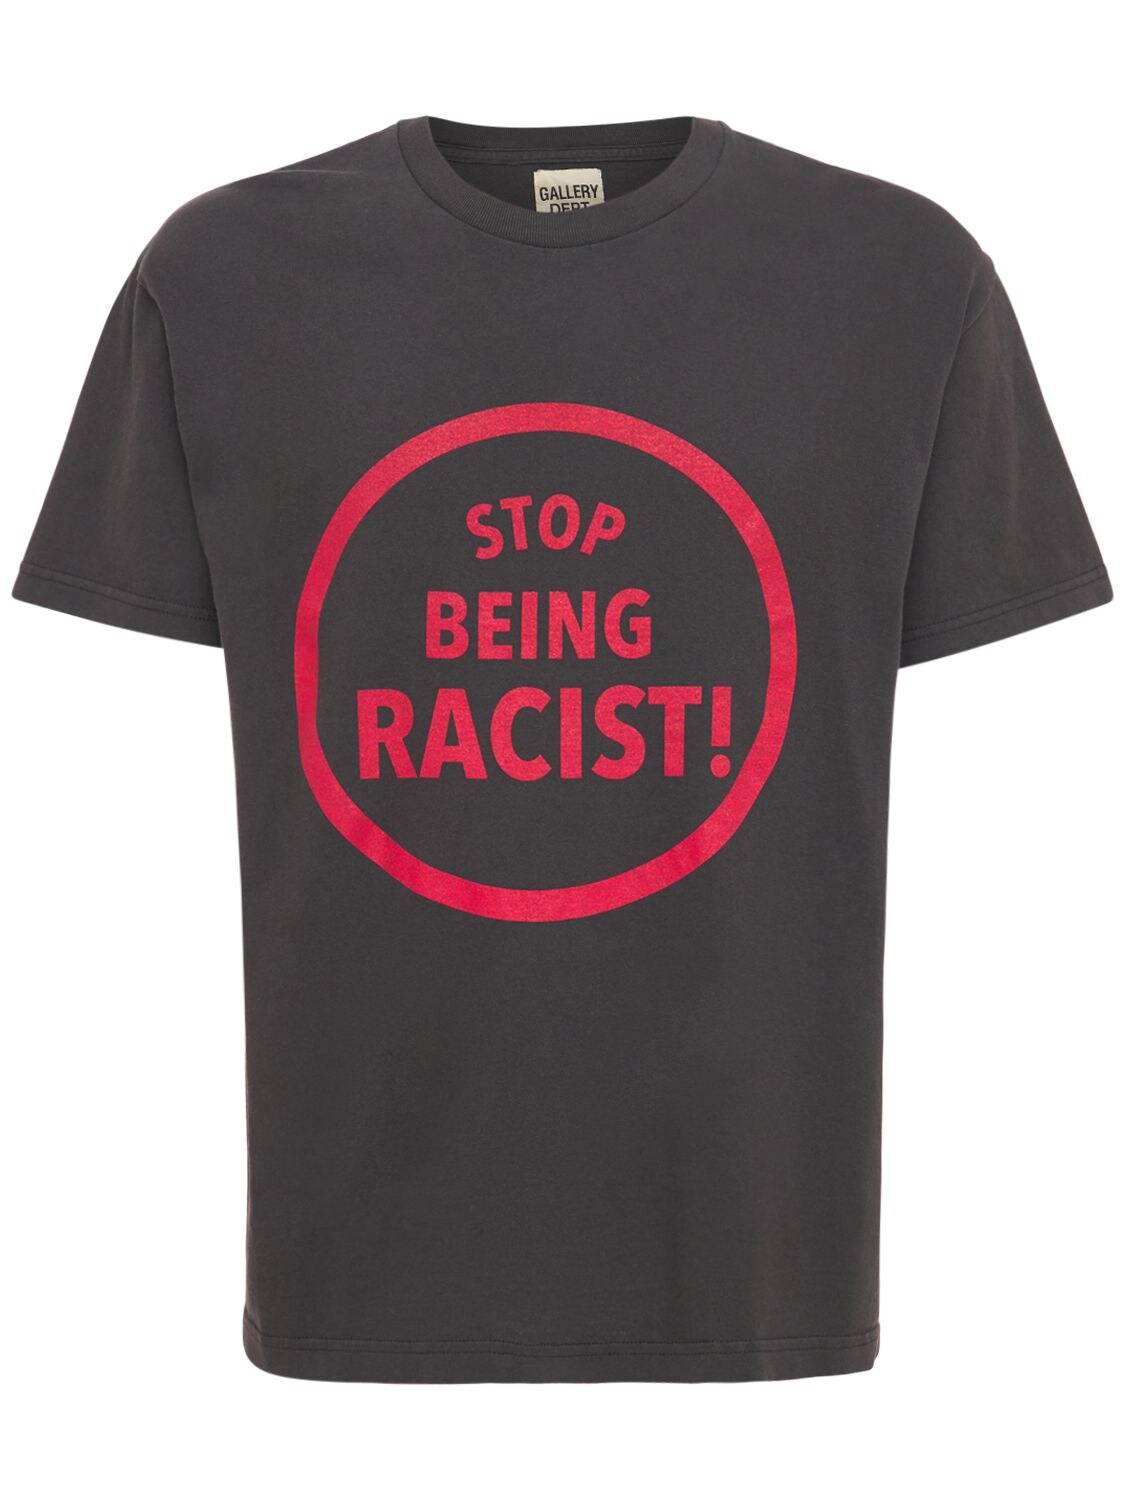 T-shirt En Jersey Imprimé Stop Being Racist - GALLERY DEPT. - Modalova